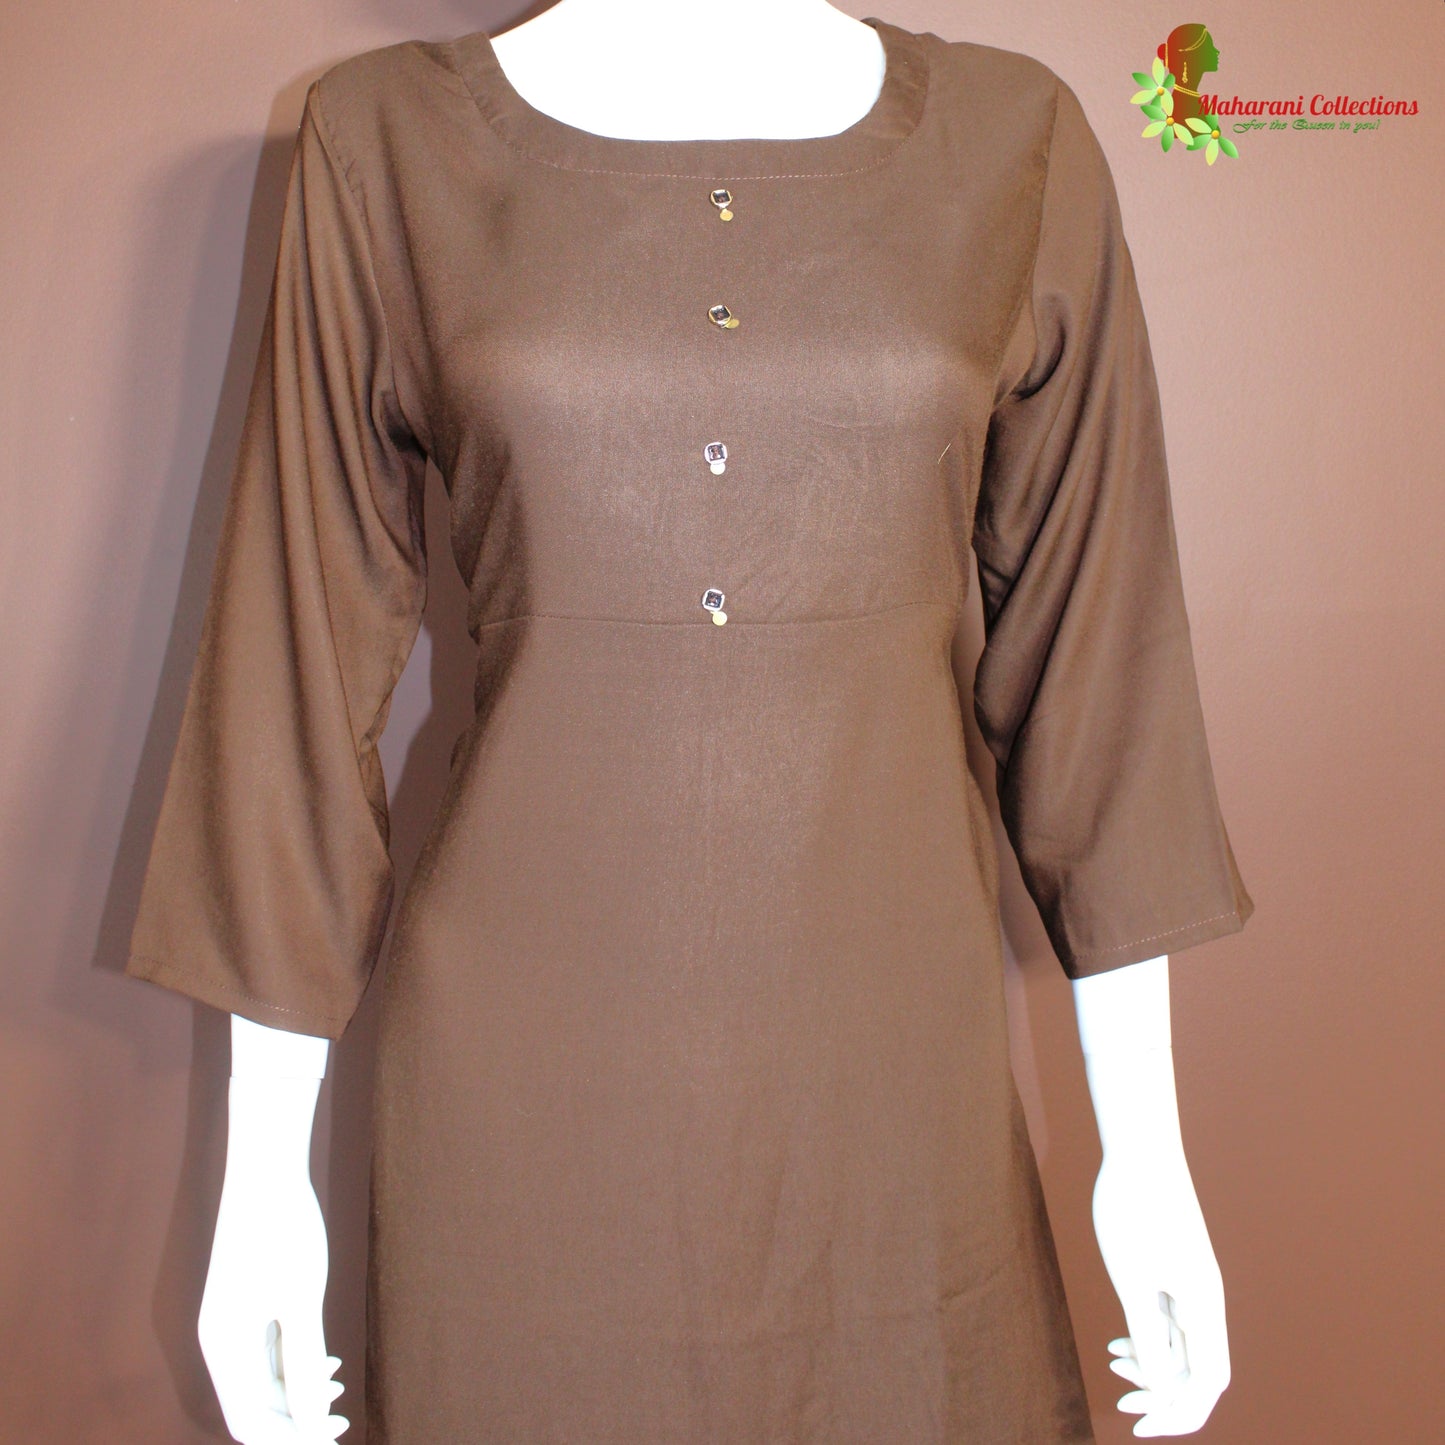 Maharani's Long Dress - Soft Cotton - Coffee Brown (L)